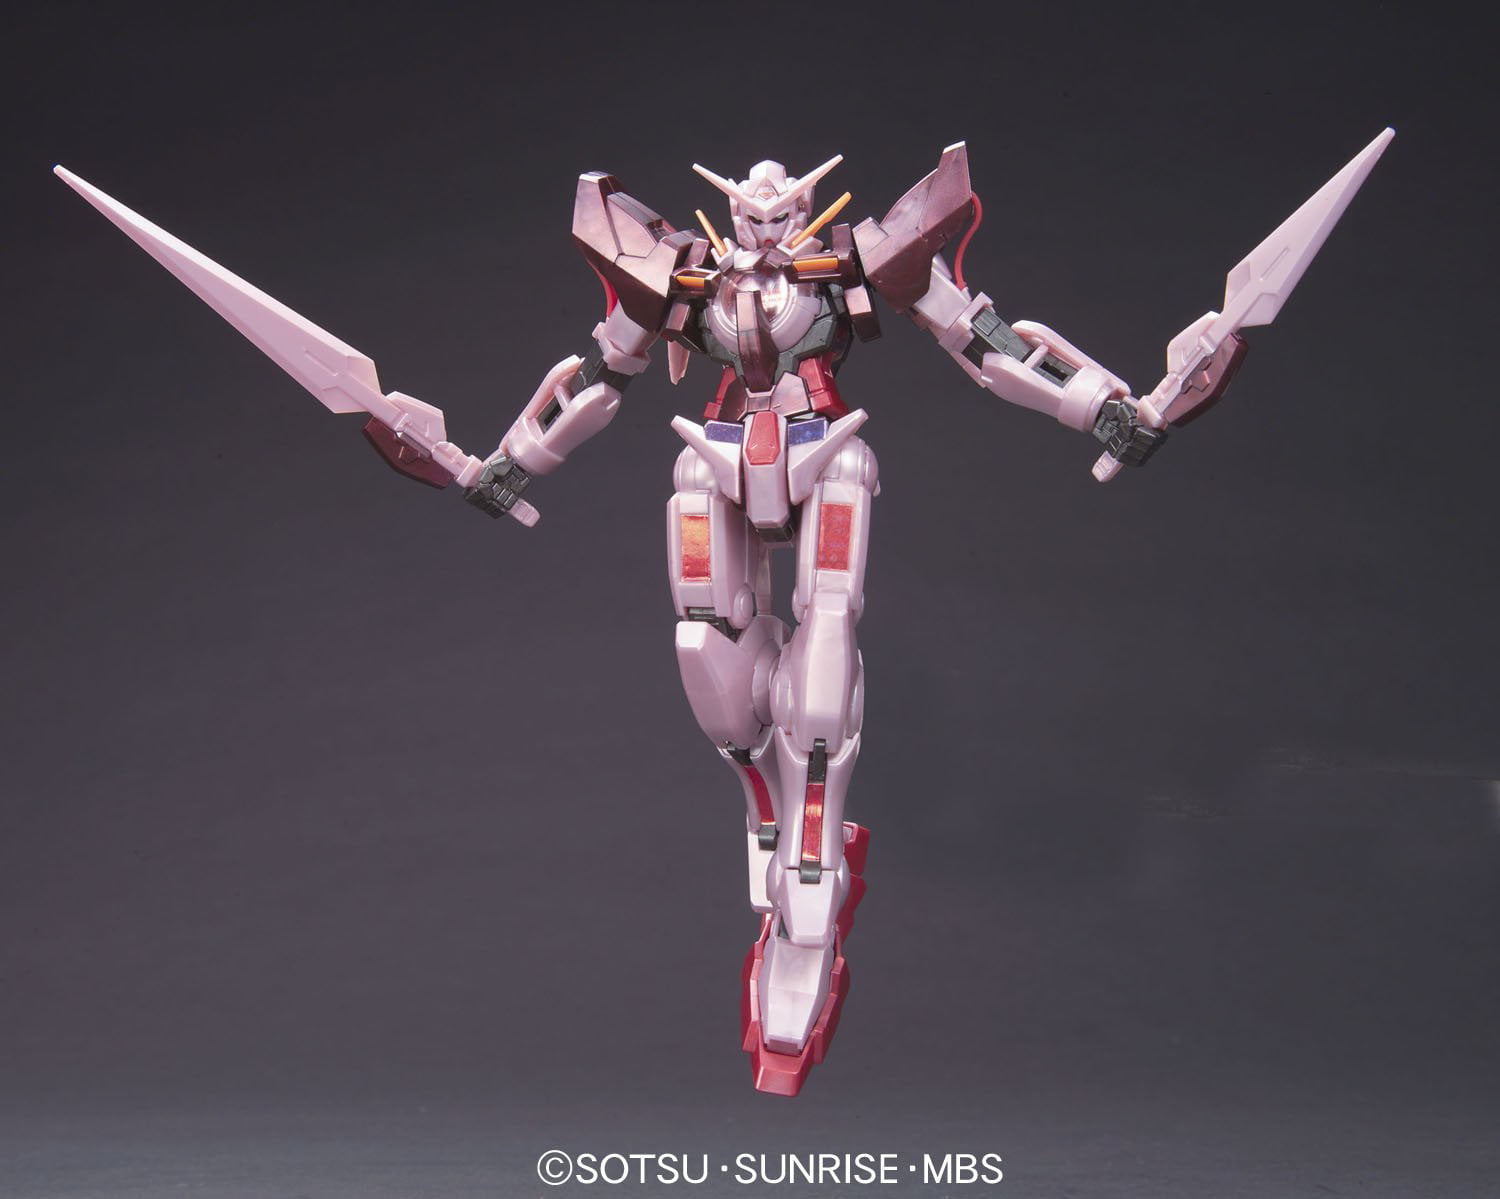 Bandai MG 00 1/100 Gn-001 Gundam Exia Trans-am Mode Gloss 161570 US SELLER USA for sale online 